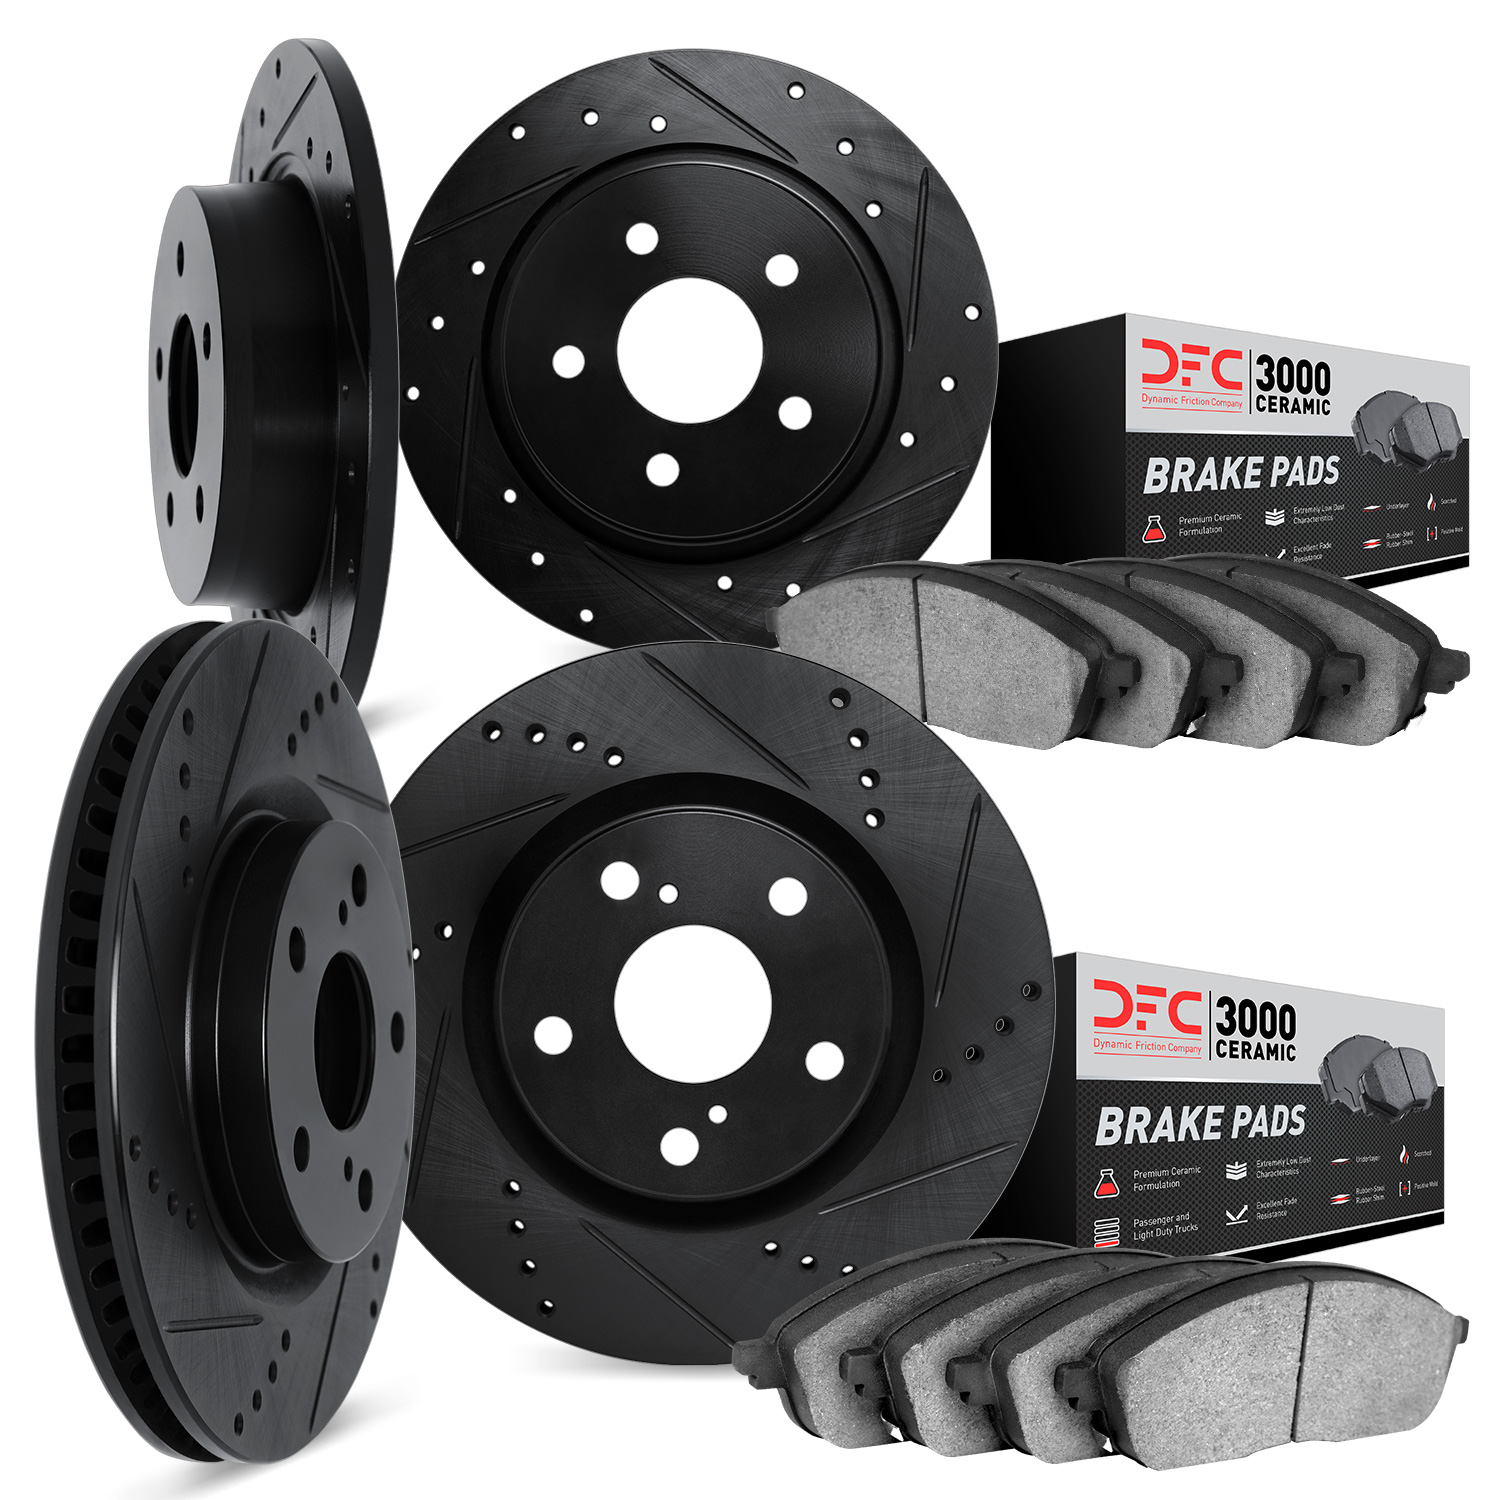 8304-76055 Drilled/Slotted Brake Rotors with 3000-Series Ceramic Brake Pads Kit [Black], 2004-2010 Lexus/Toyota/Scion, Position: